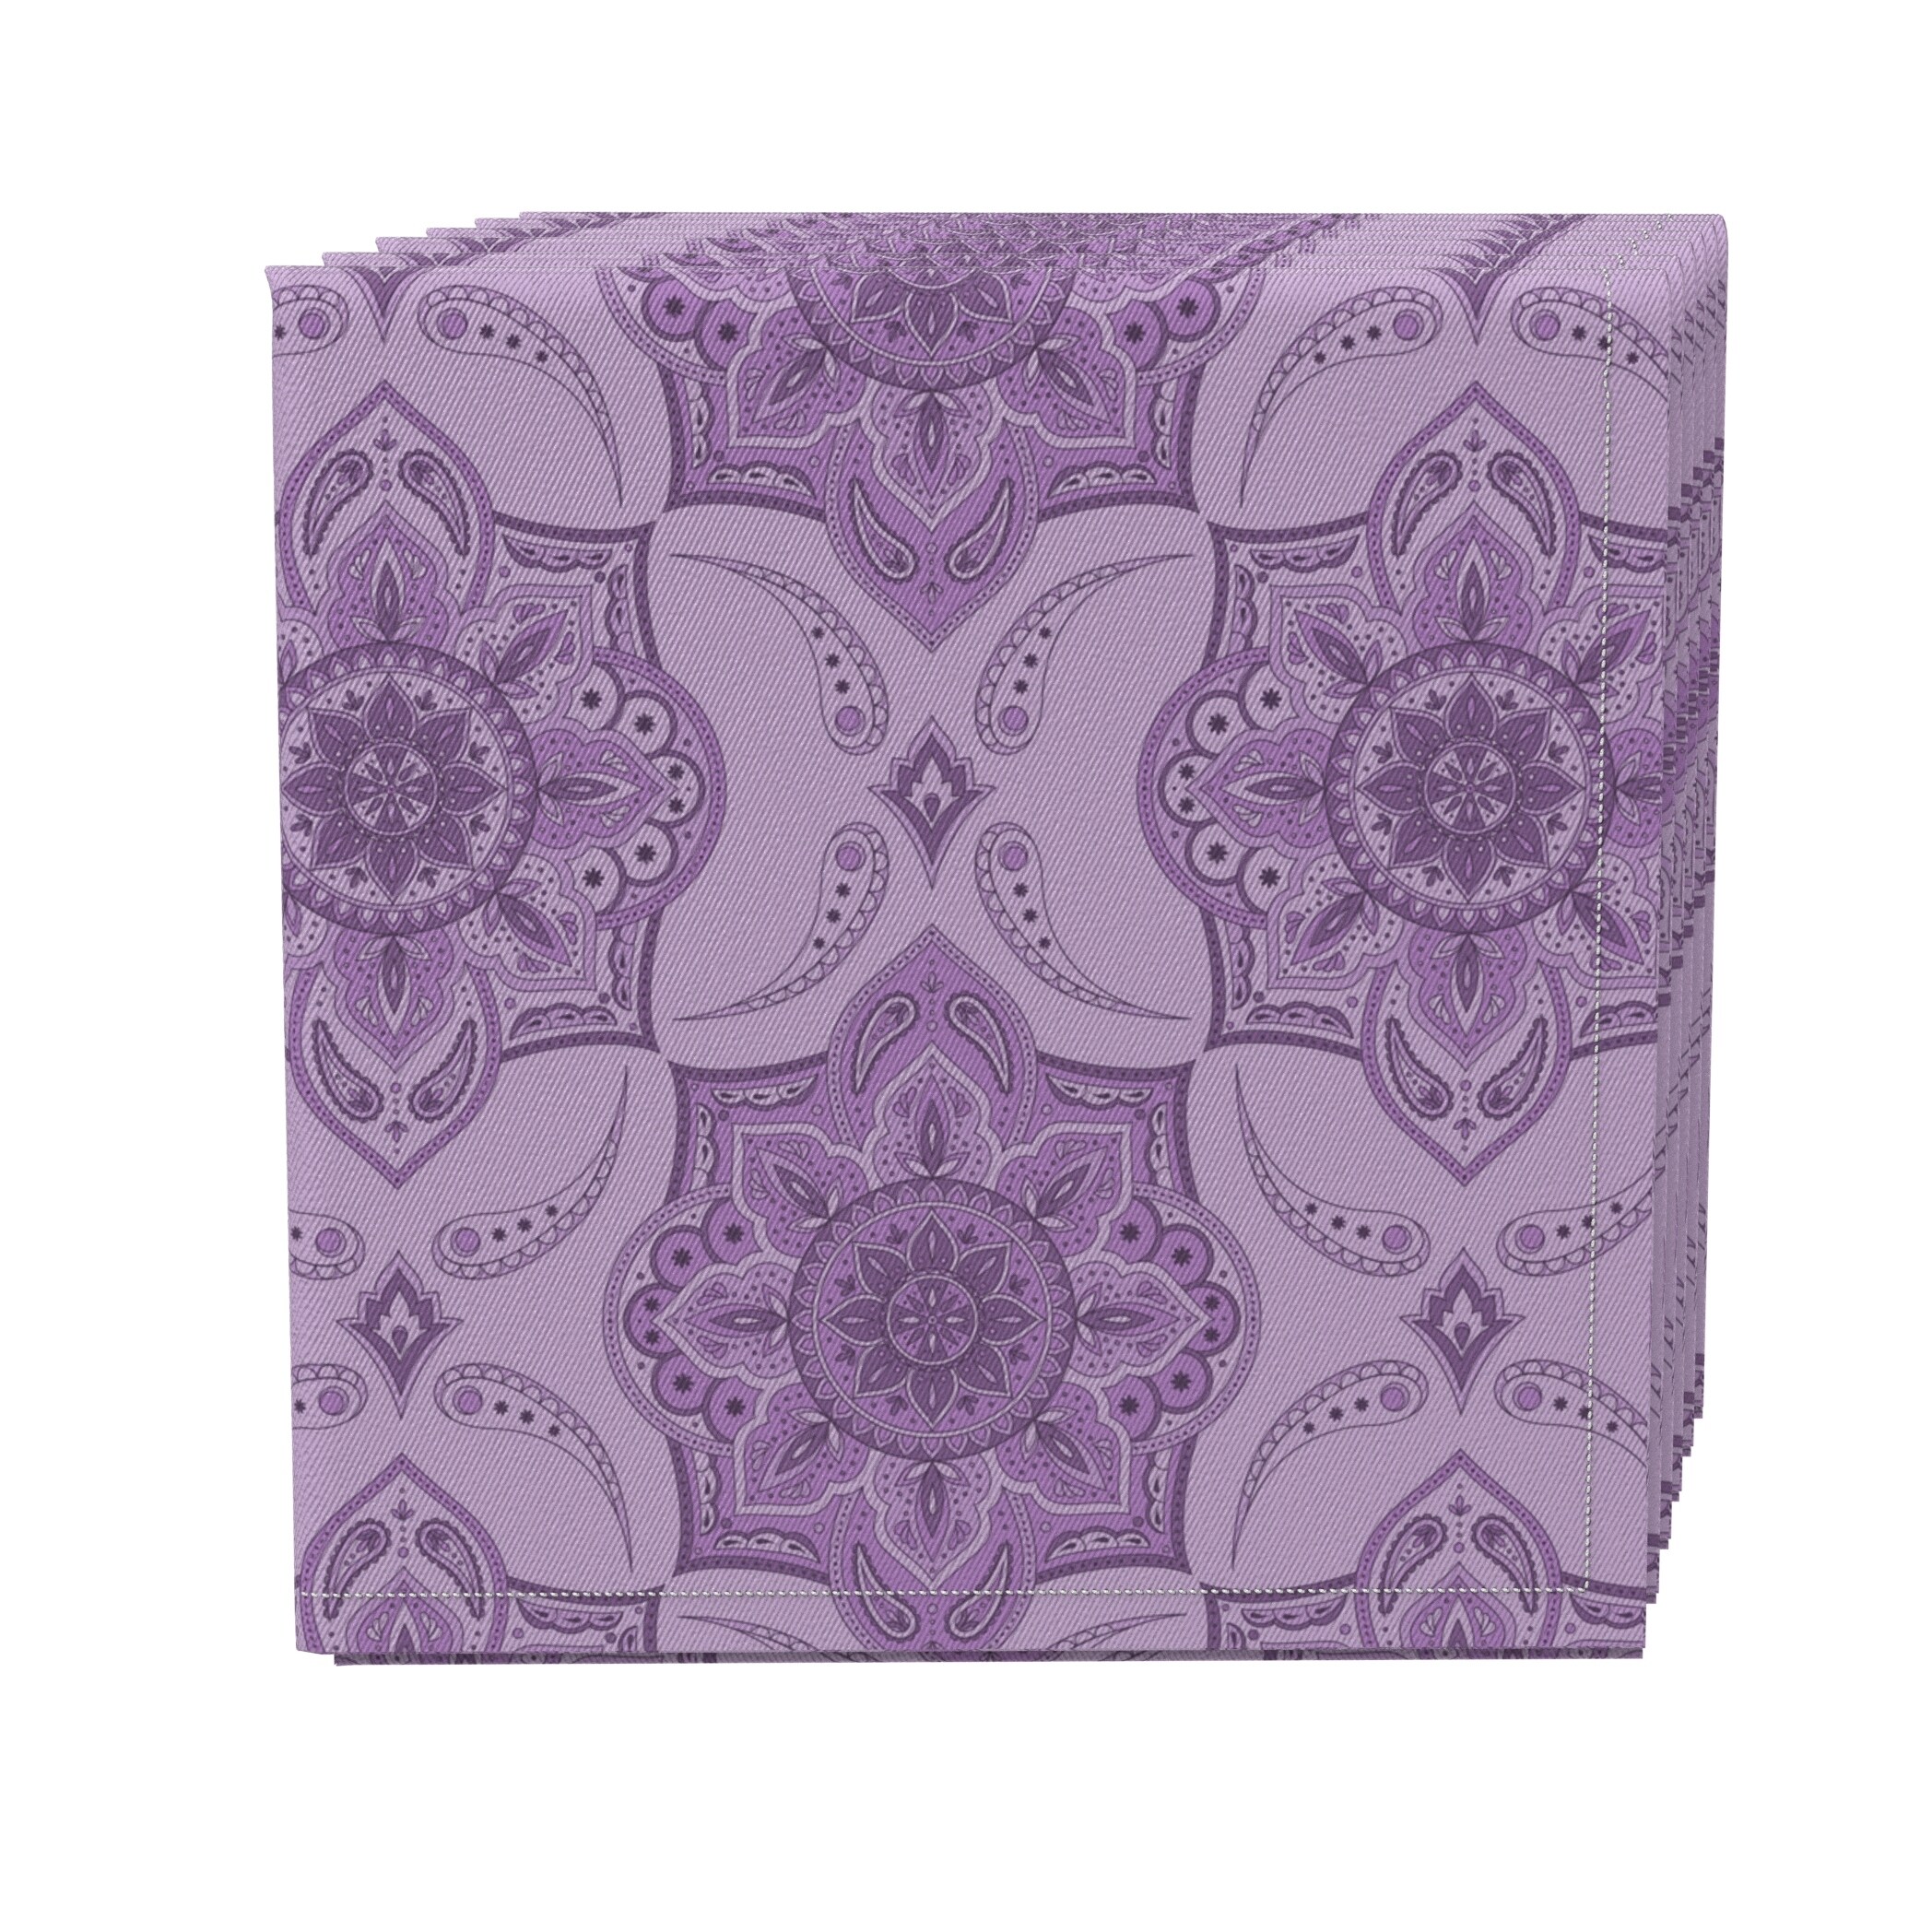 Fabric Textile Products, Inc. Napkin Set of 4, 100% Cotton, 20x20", Purple Damask Paisley - 20 x 20